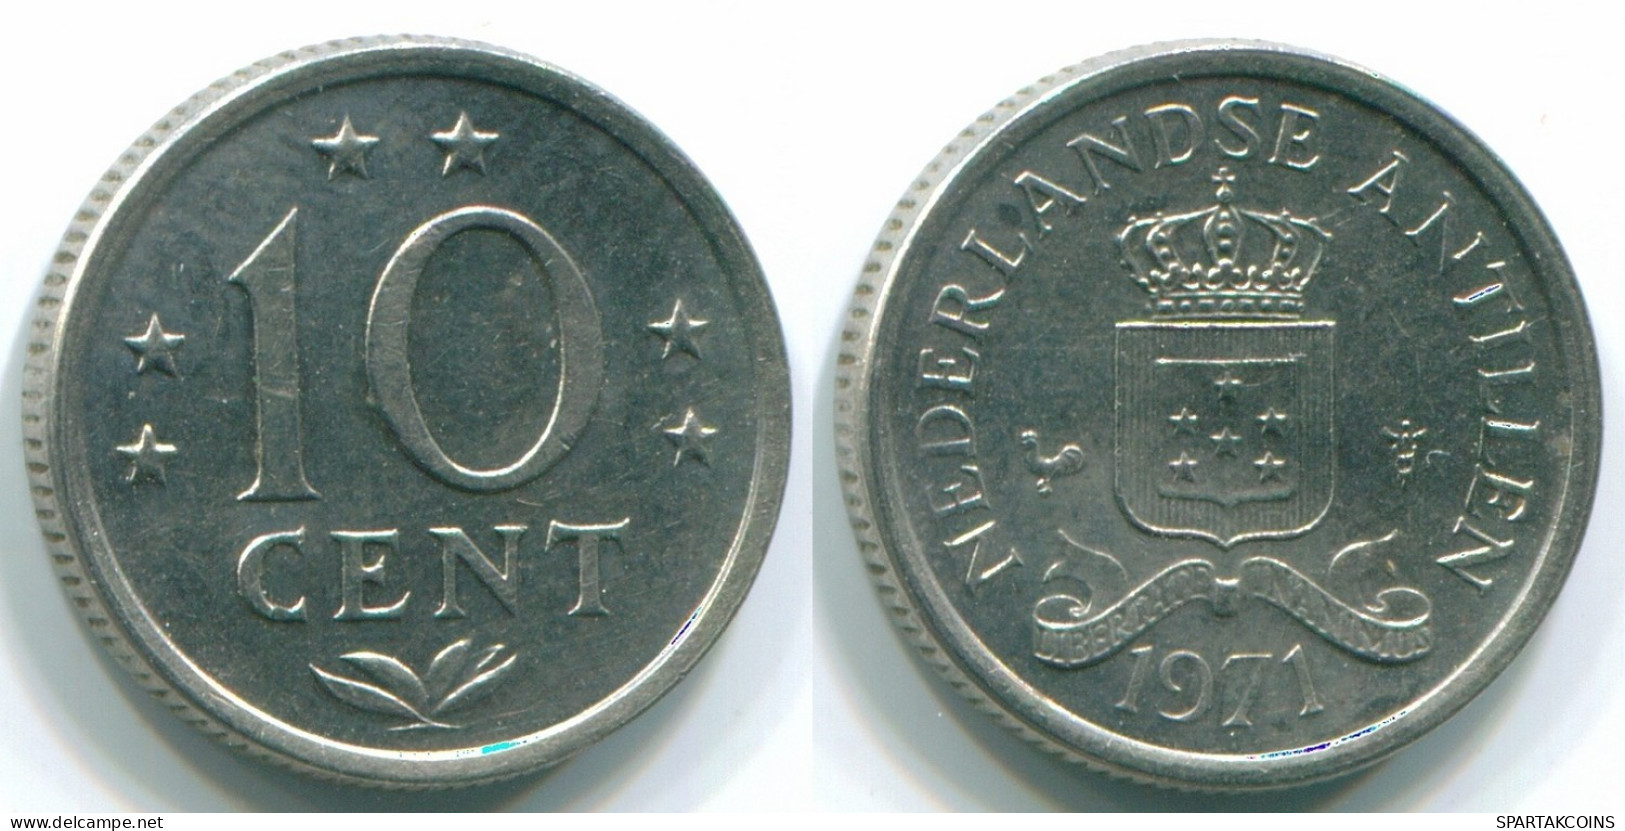 10 CENTS 1971 NIEDERLÄNDISCHE ANTILLEN Nickel Koloniale Münze #S13453.D.A - Nederlandse Antillen